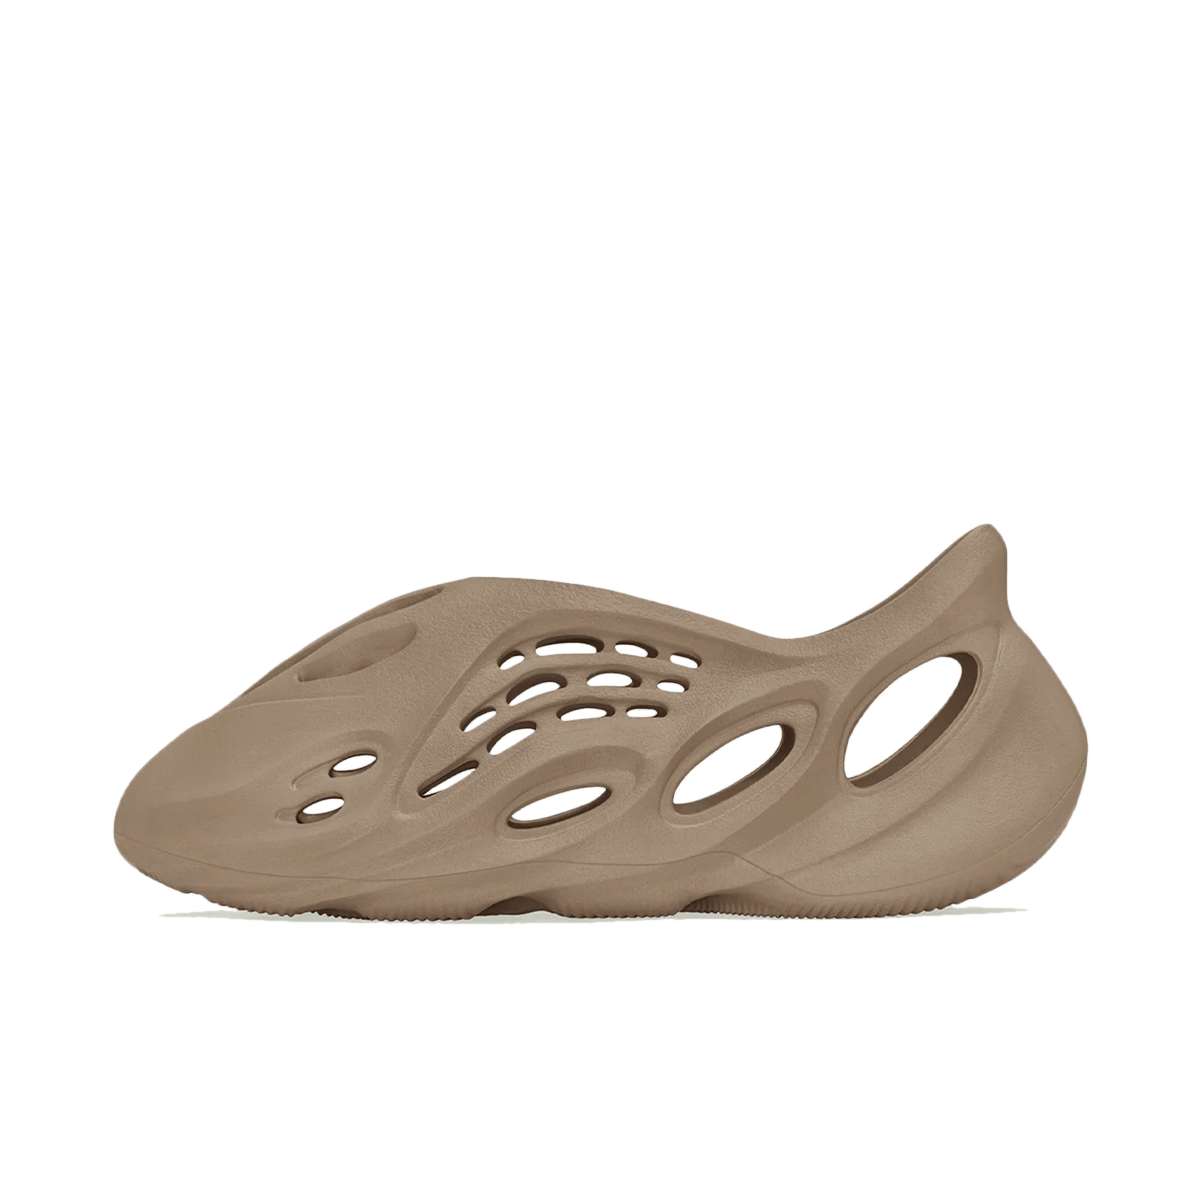 adidas Yeezy Foam Runner 'Mist' GV6774